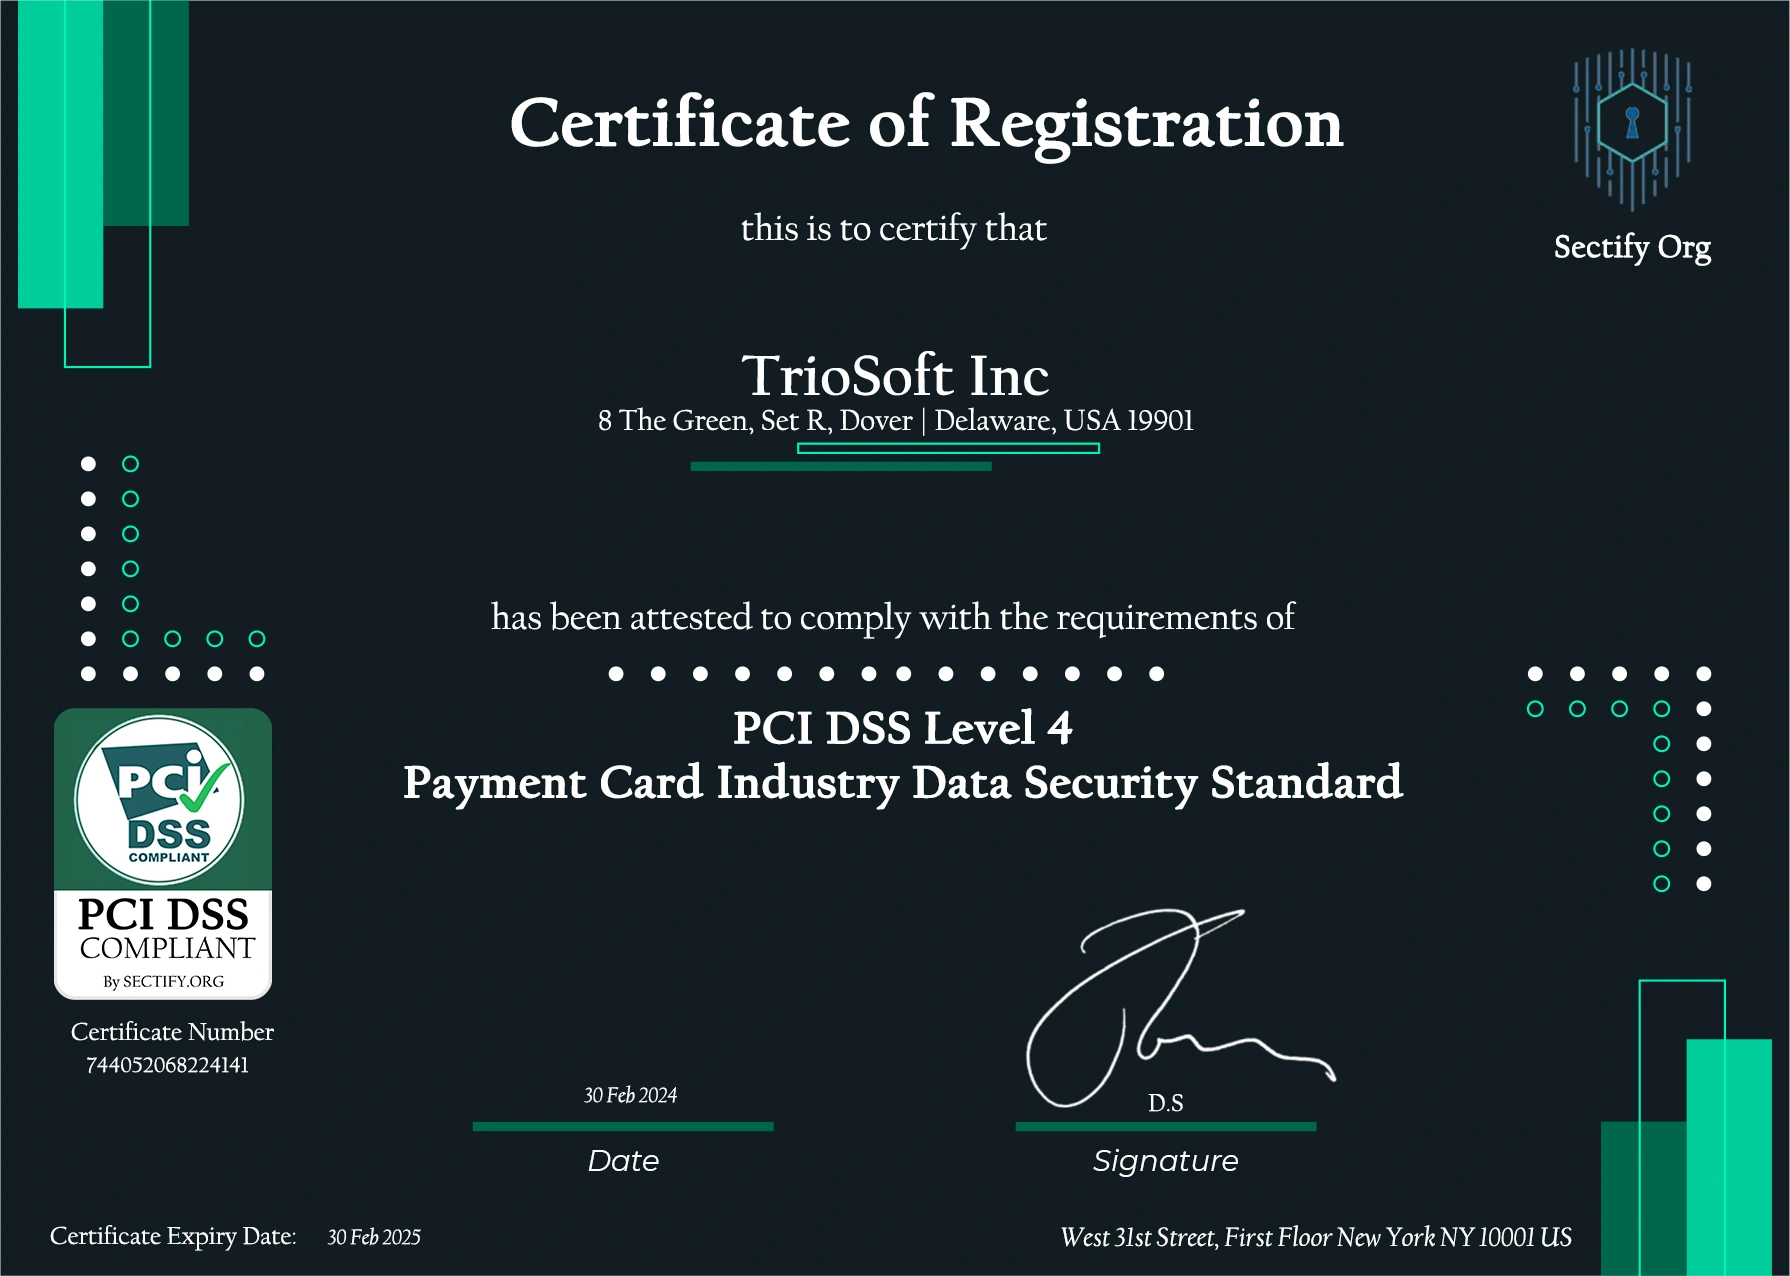 Trio's PCI DSS certificate